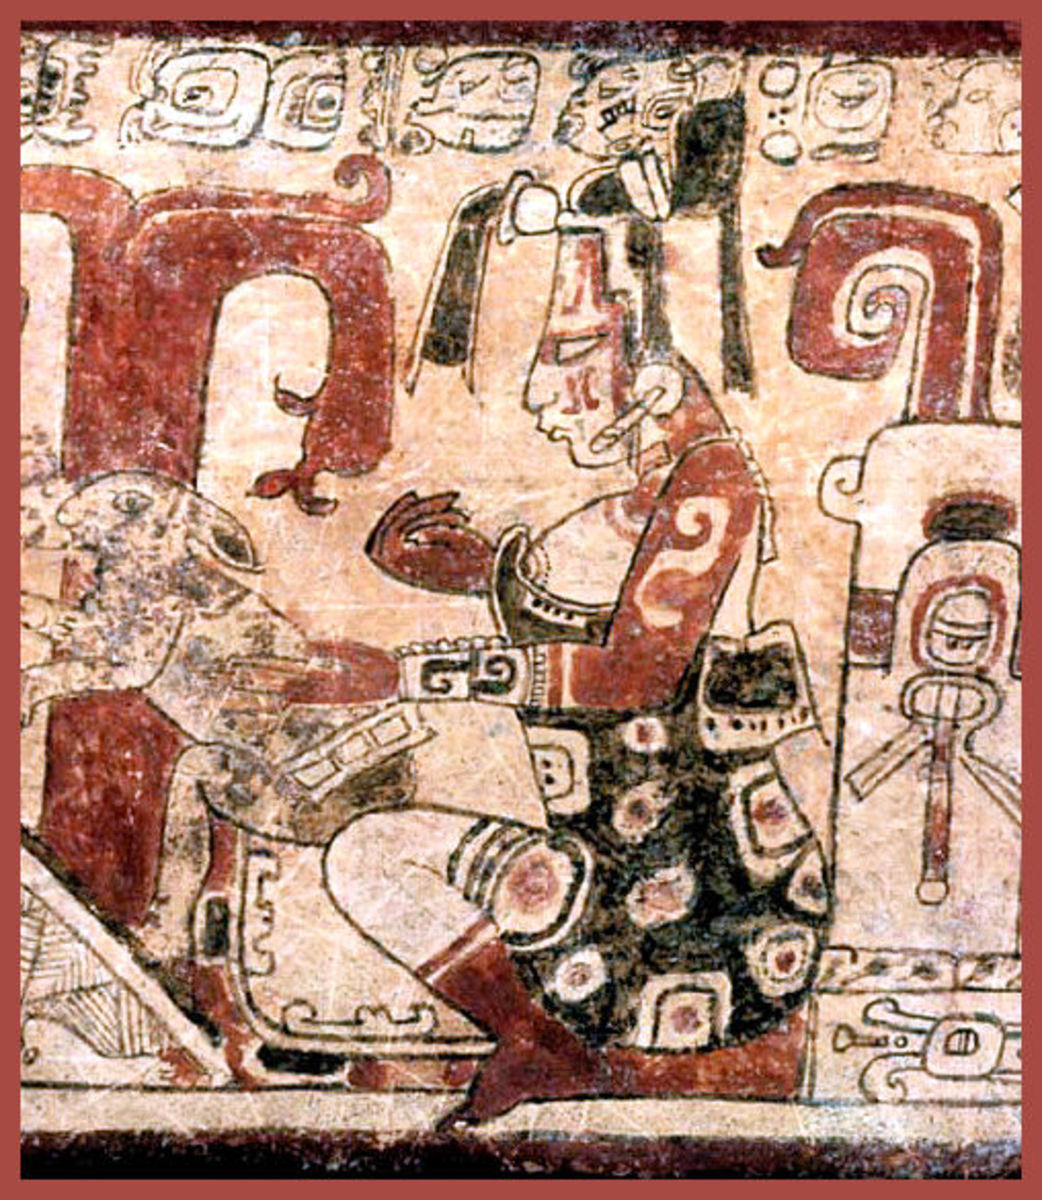 Ixchel, the Mayan Goddess of Fertility and Medicine